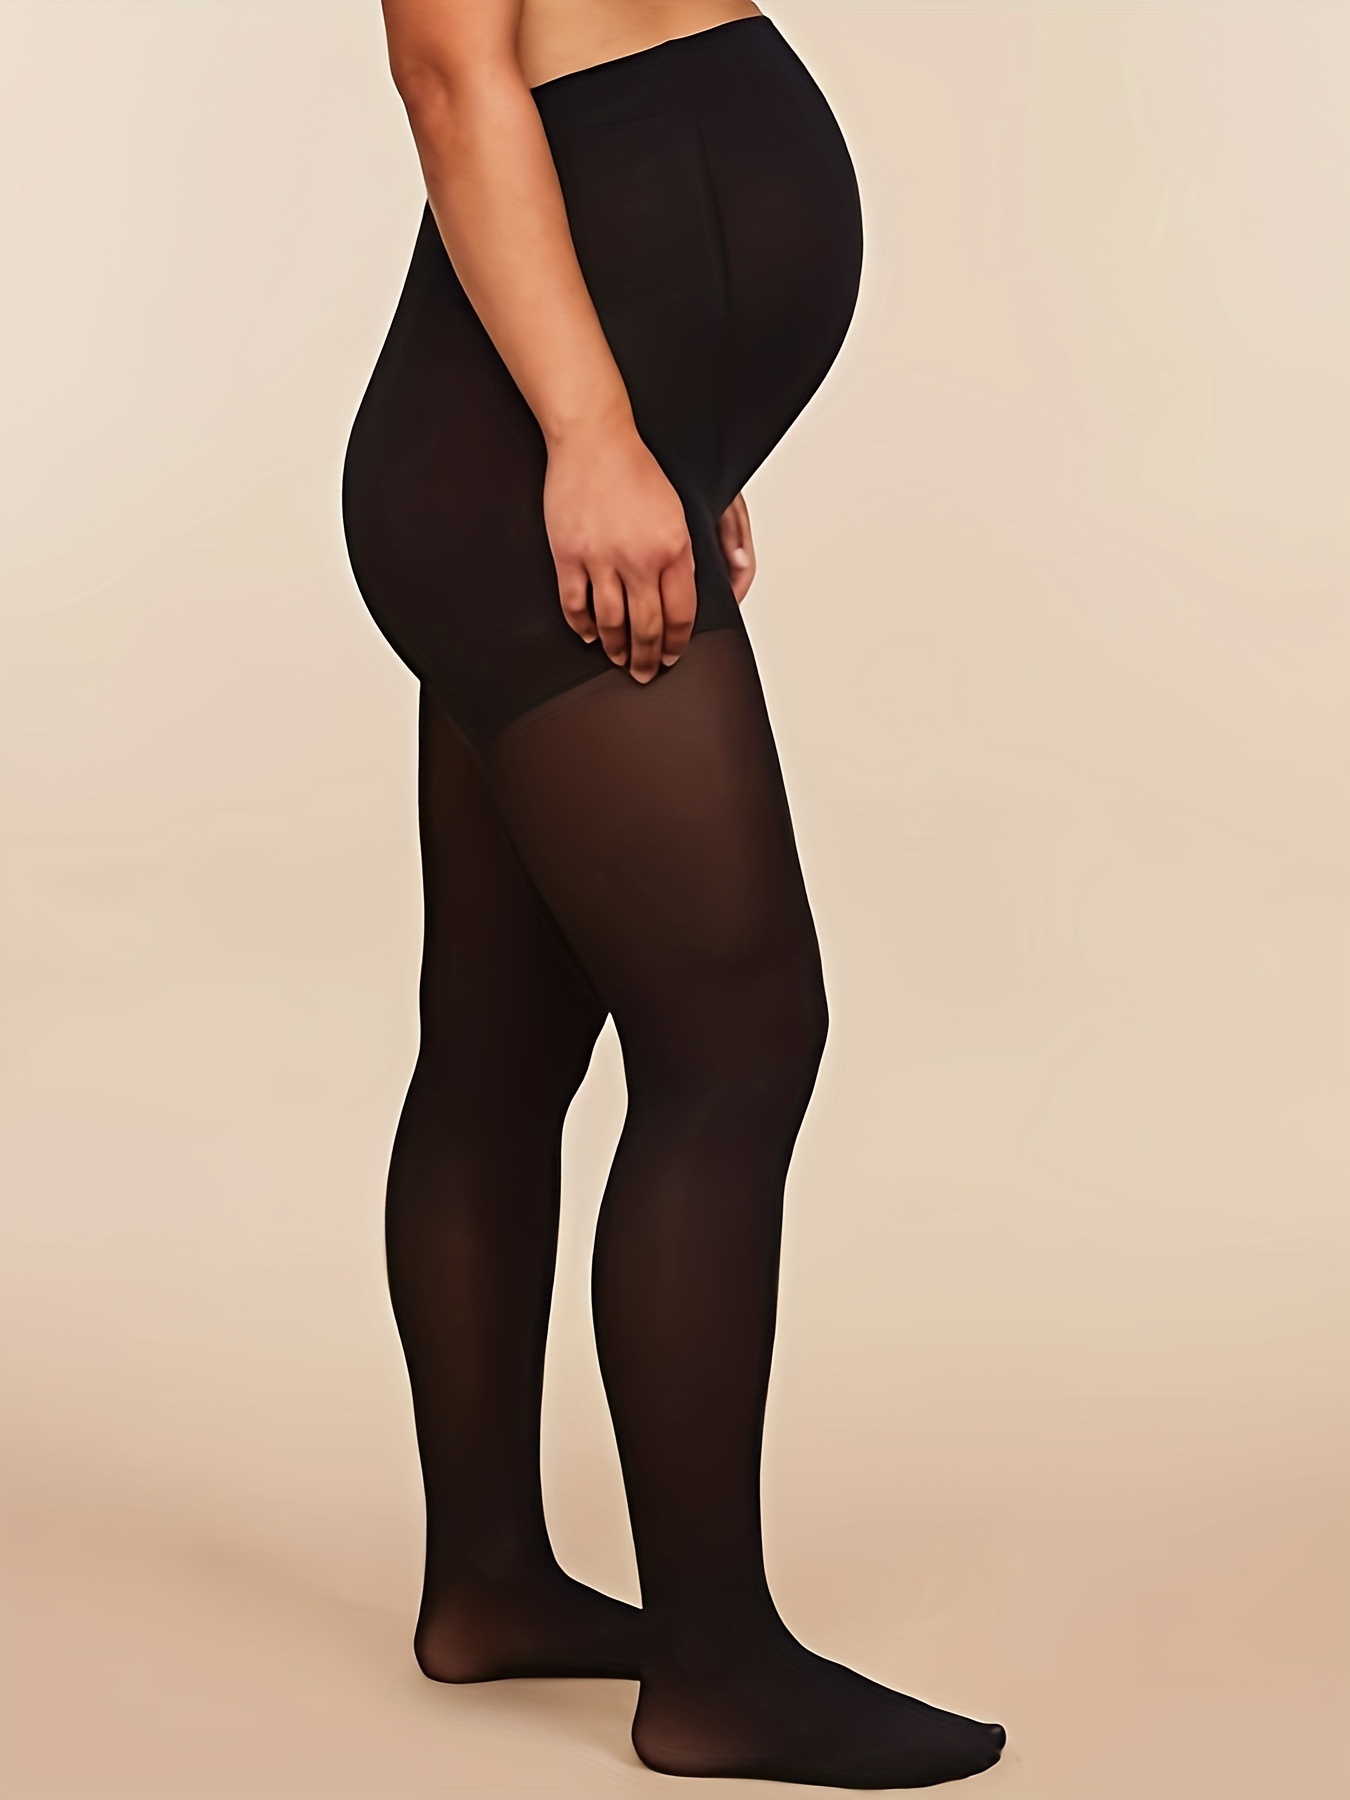 Fashion Sexy Plus-size Women Pregnant Maternity Tights Pantyhose